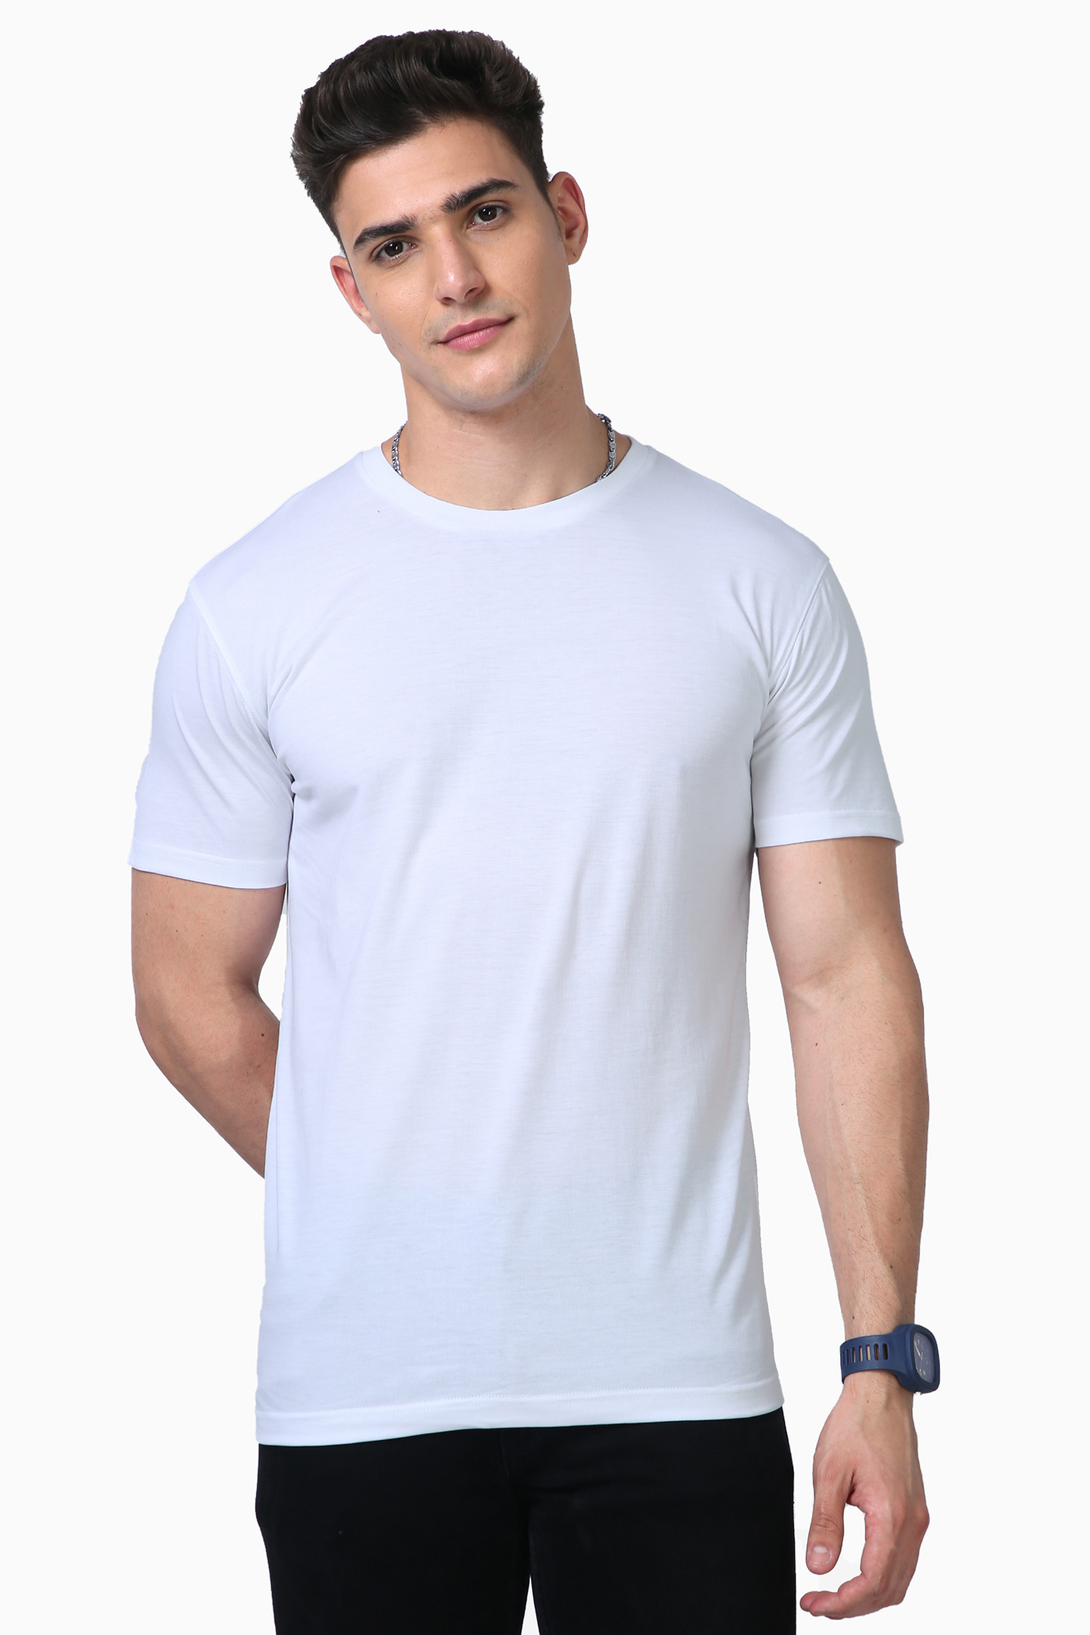 Plain Supima T-Shirts For Men - WowWaves - 1